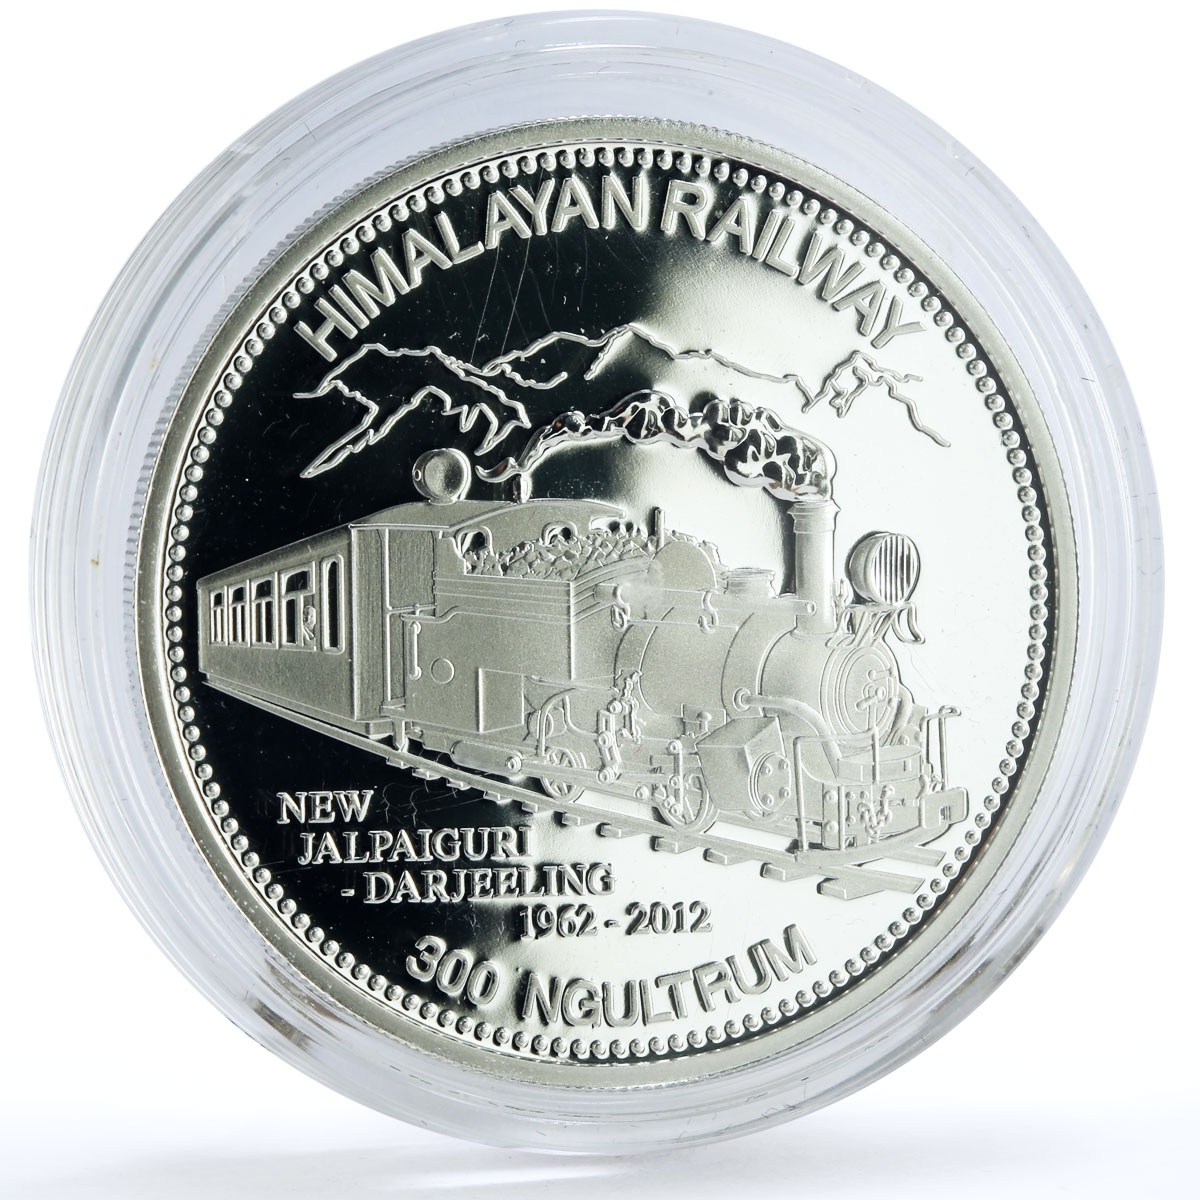 Bhutan 300 ngultrum Trains Railways Himalayan Locomotive proof silver coin 2012